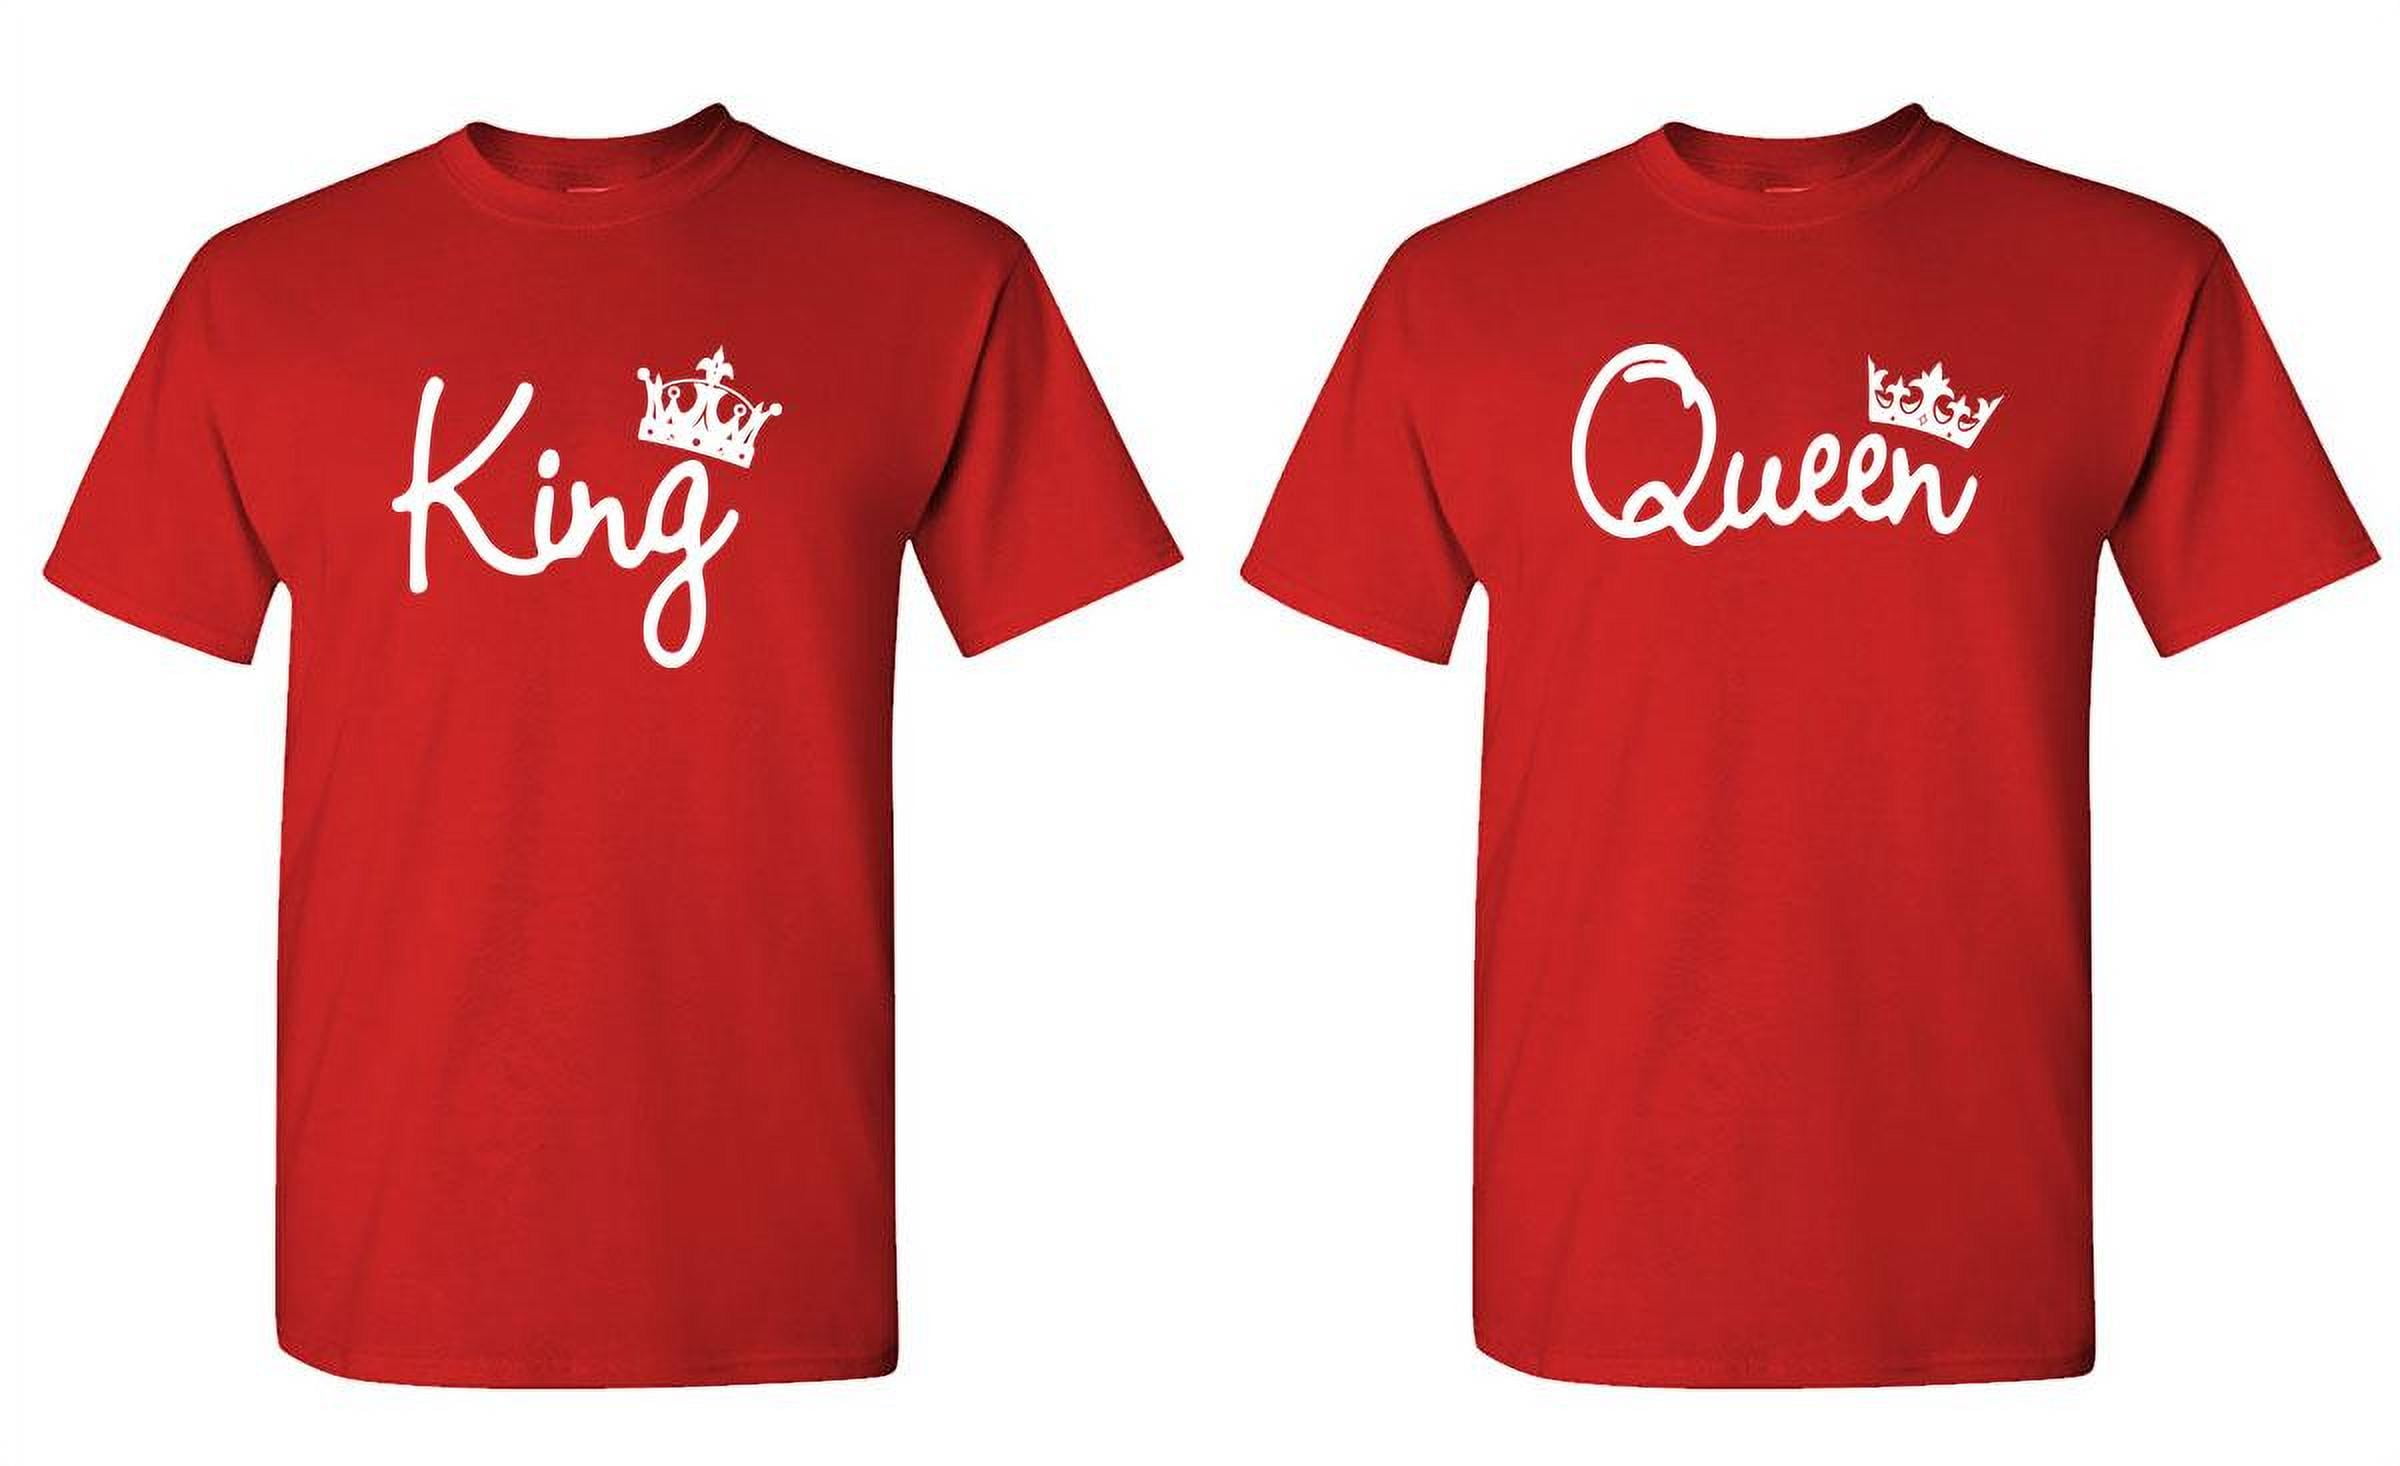 KING QUEEN - Unisex Cotton Tee COMBO, Red, XL Right - Walmart.com